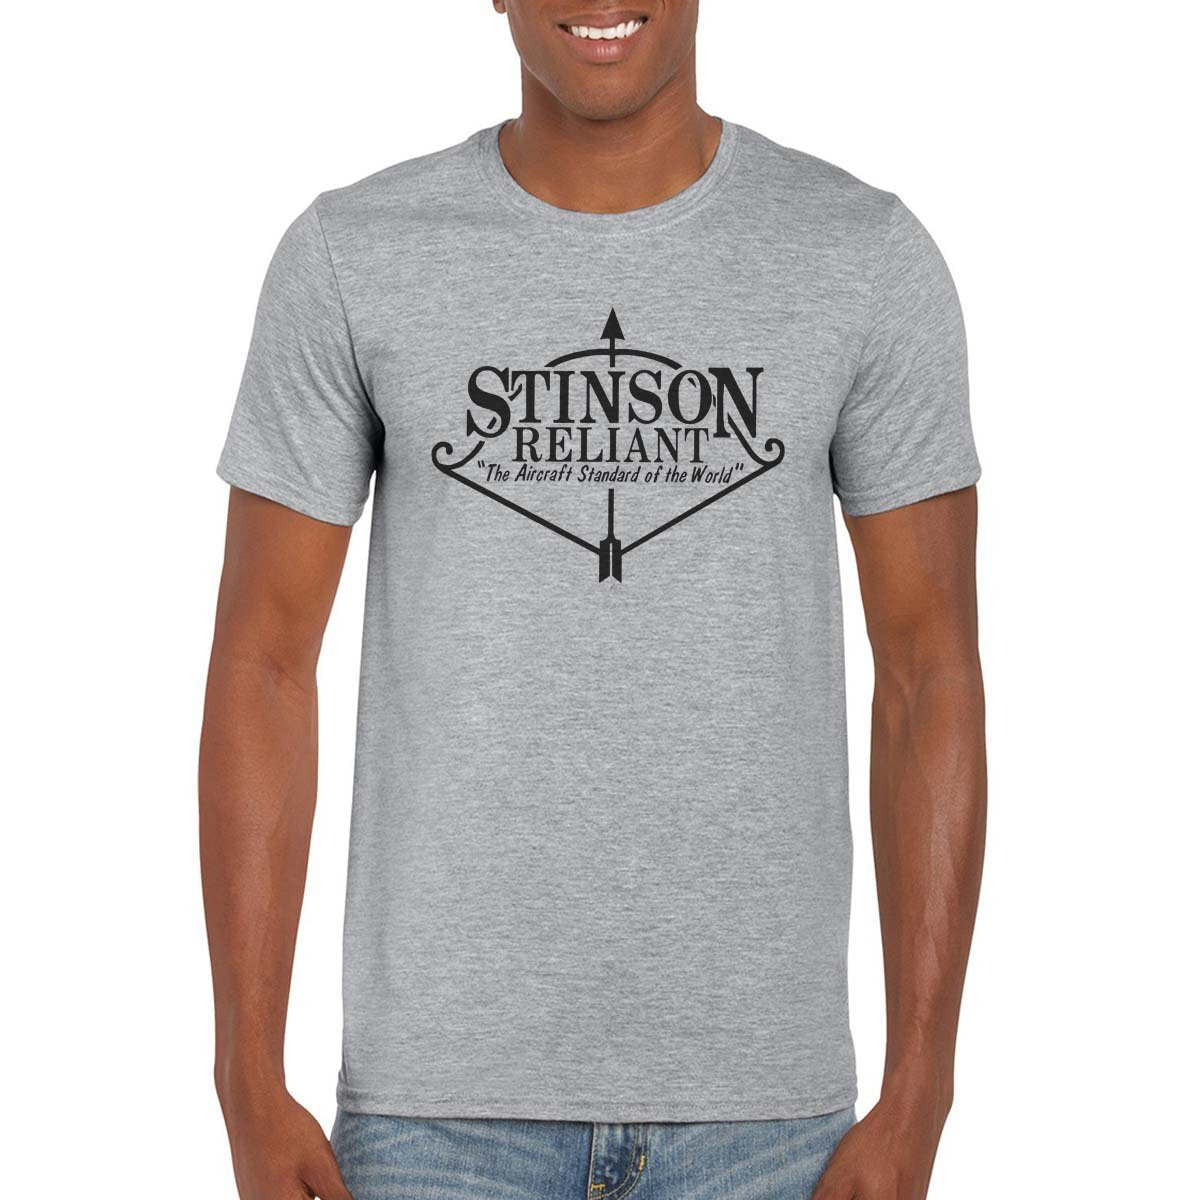 STINSON AIRCRAFT COMPANY Unisex T-Shirt